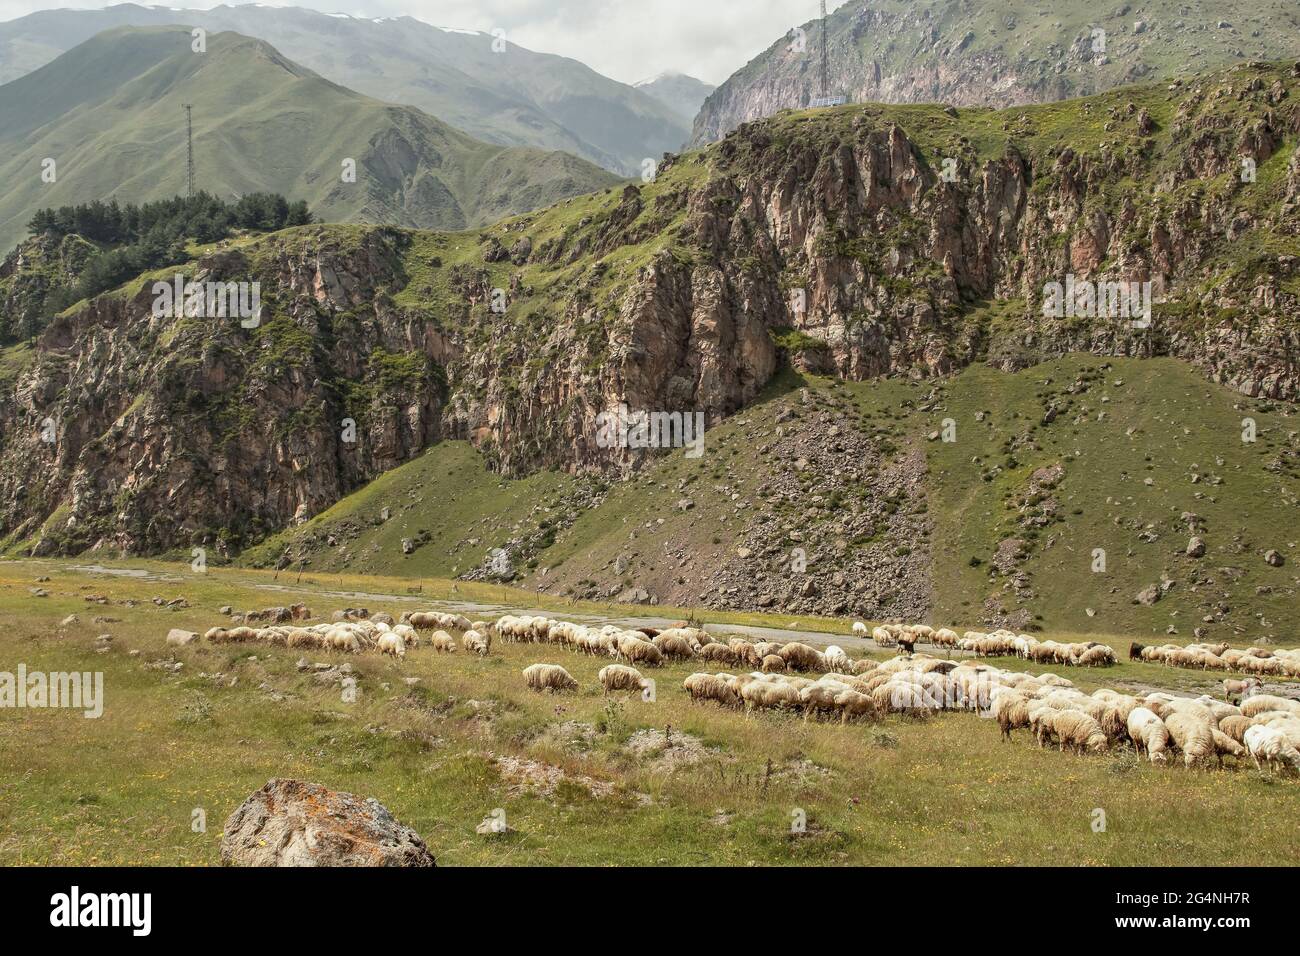 Herd of sheep grazing in lower caucasus mountains in Republic of Georgia Stock Photo